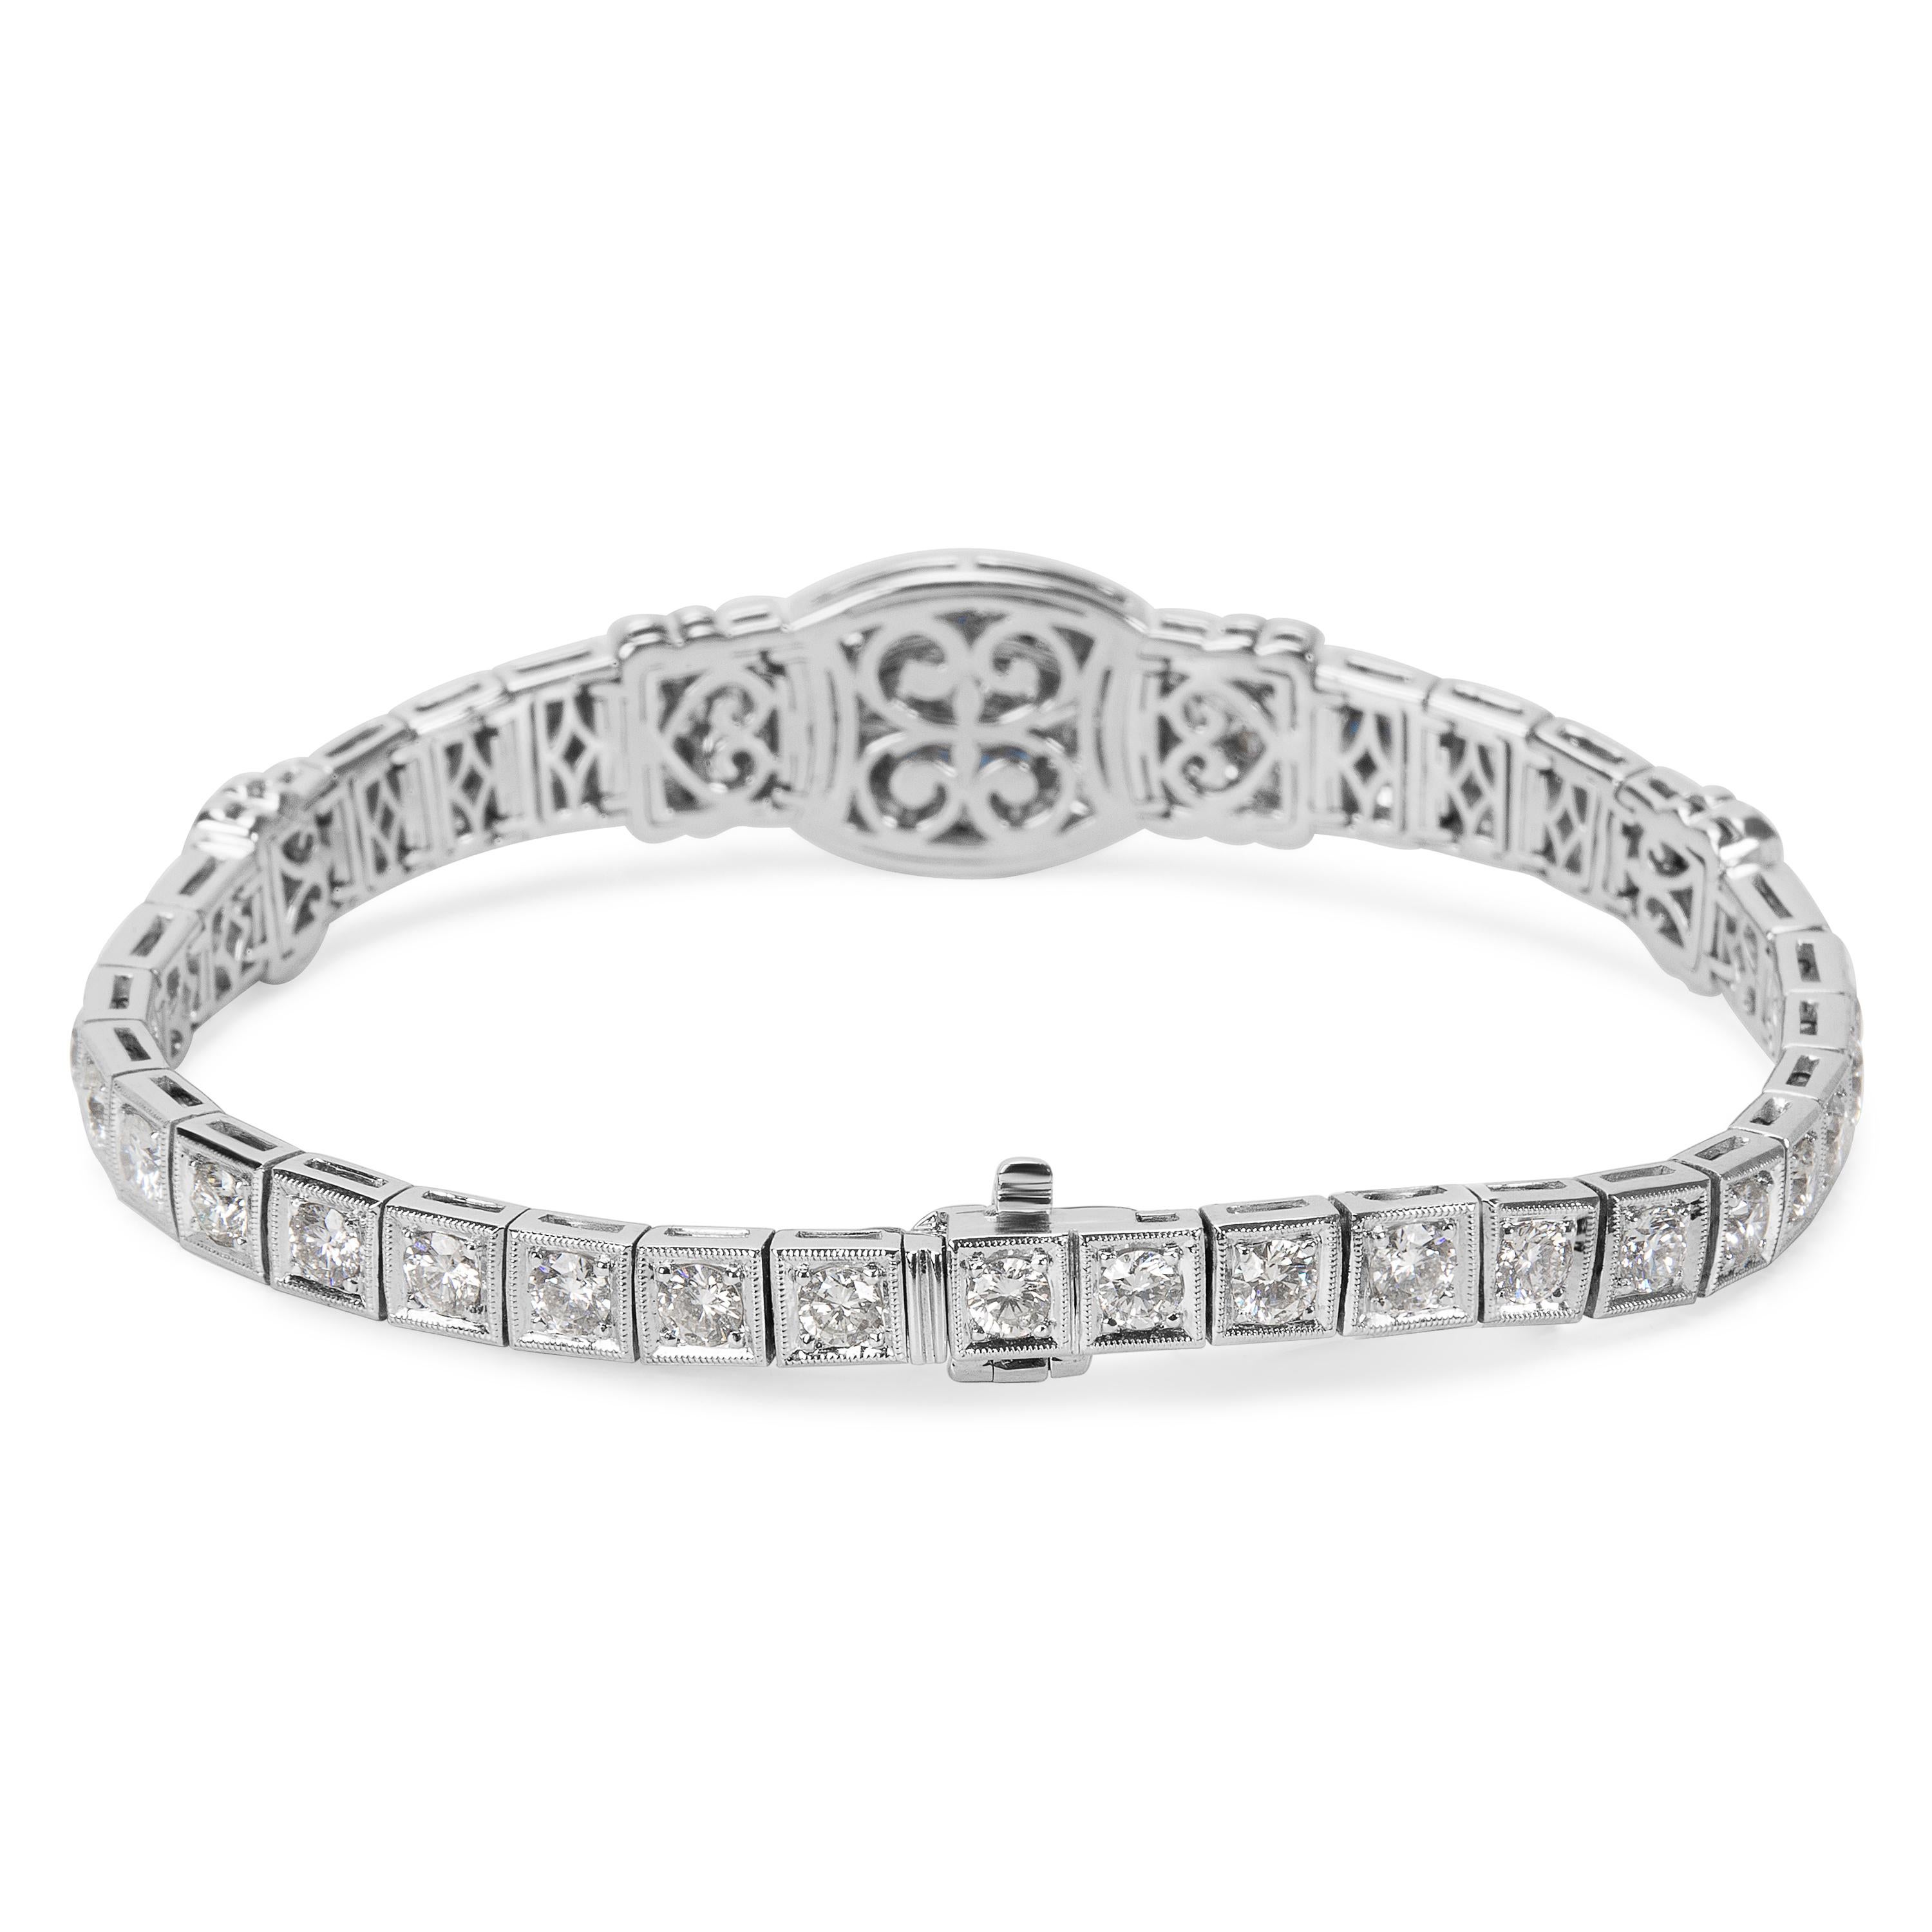 Round Cut Sapphire and Diamond Bracelet in 18 Karat White Gold ‘4.95 Carat’